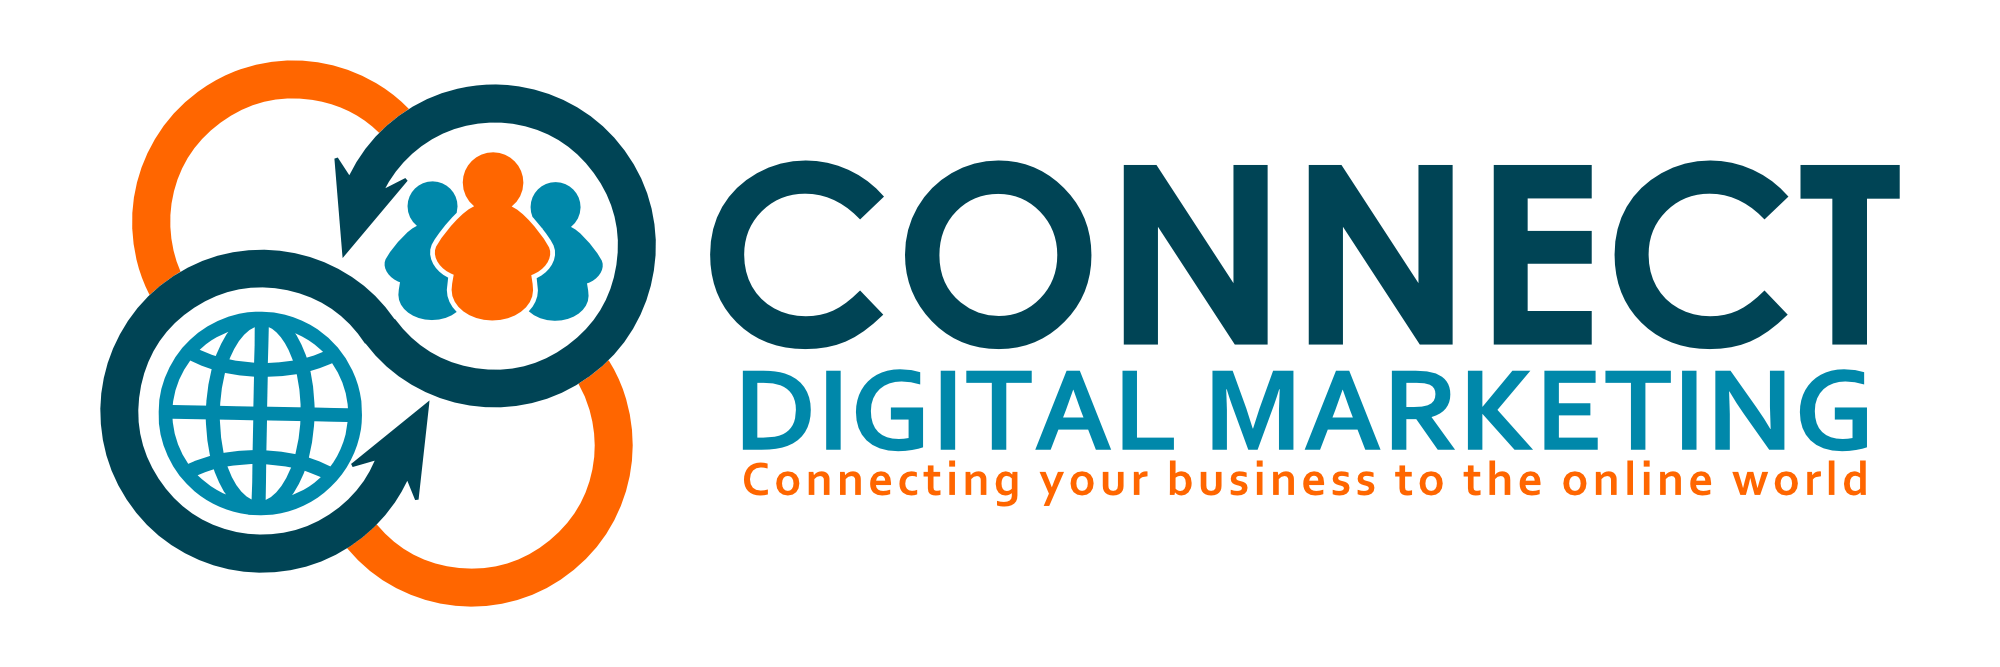 Web Digital Logo - Digital marketing Logos